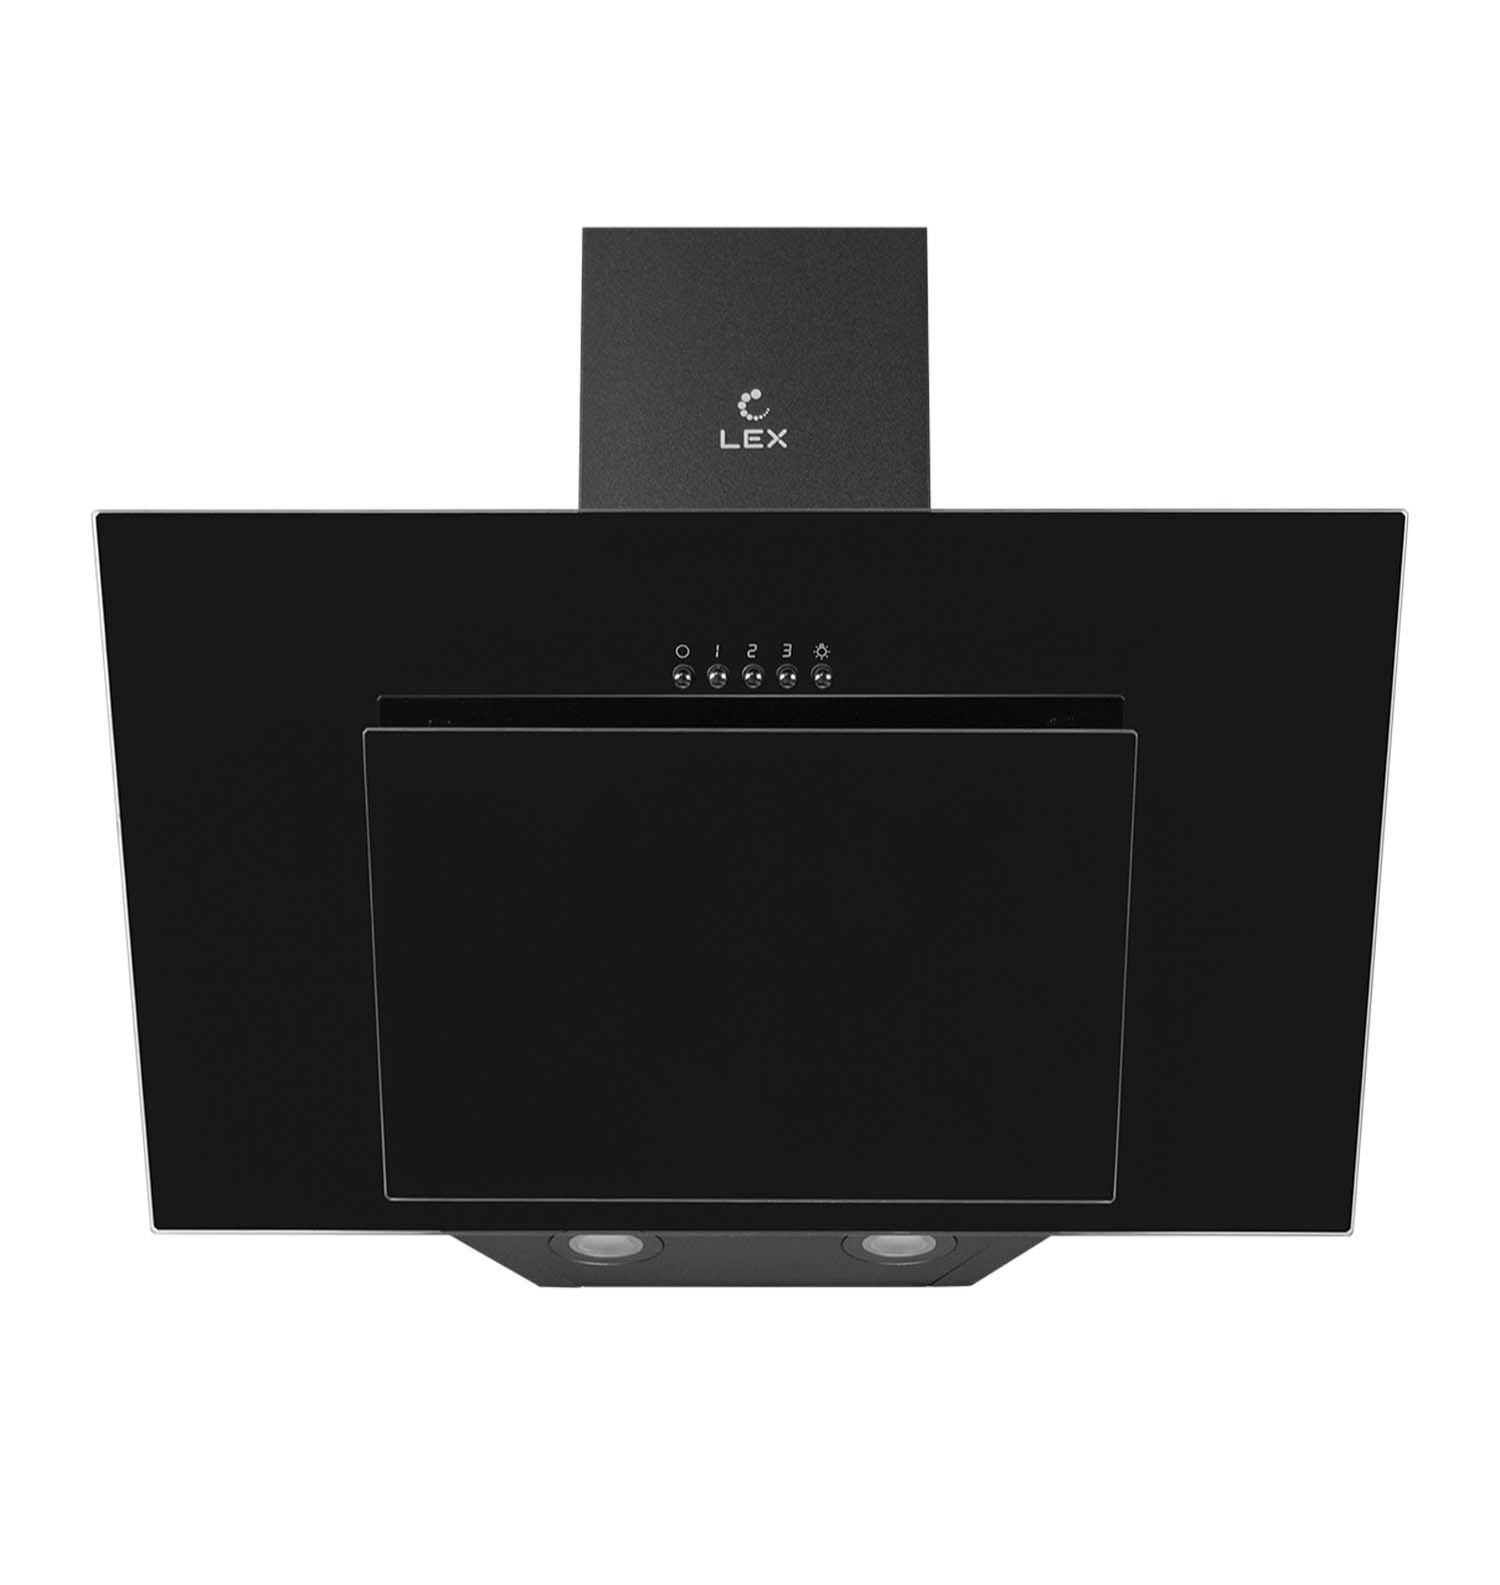 Наклонная кухонная вытяжка LEX Mira G 600 Black